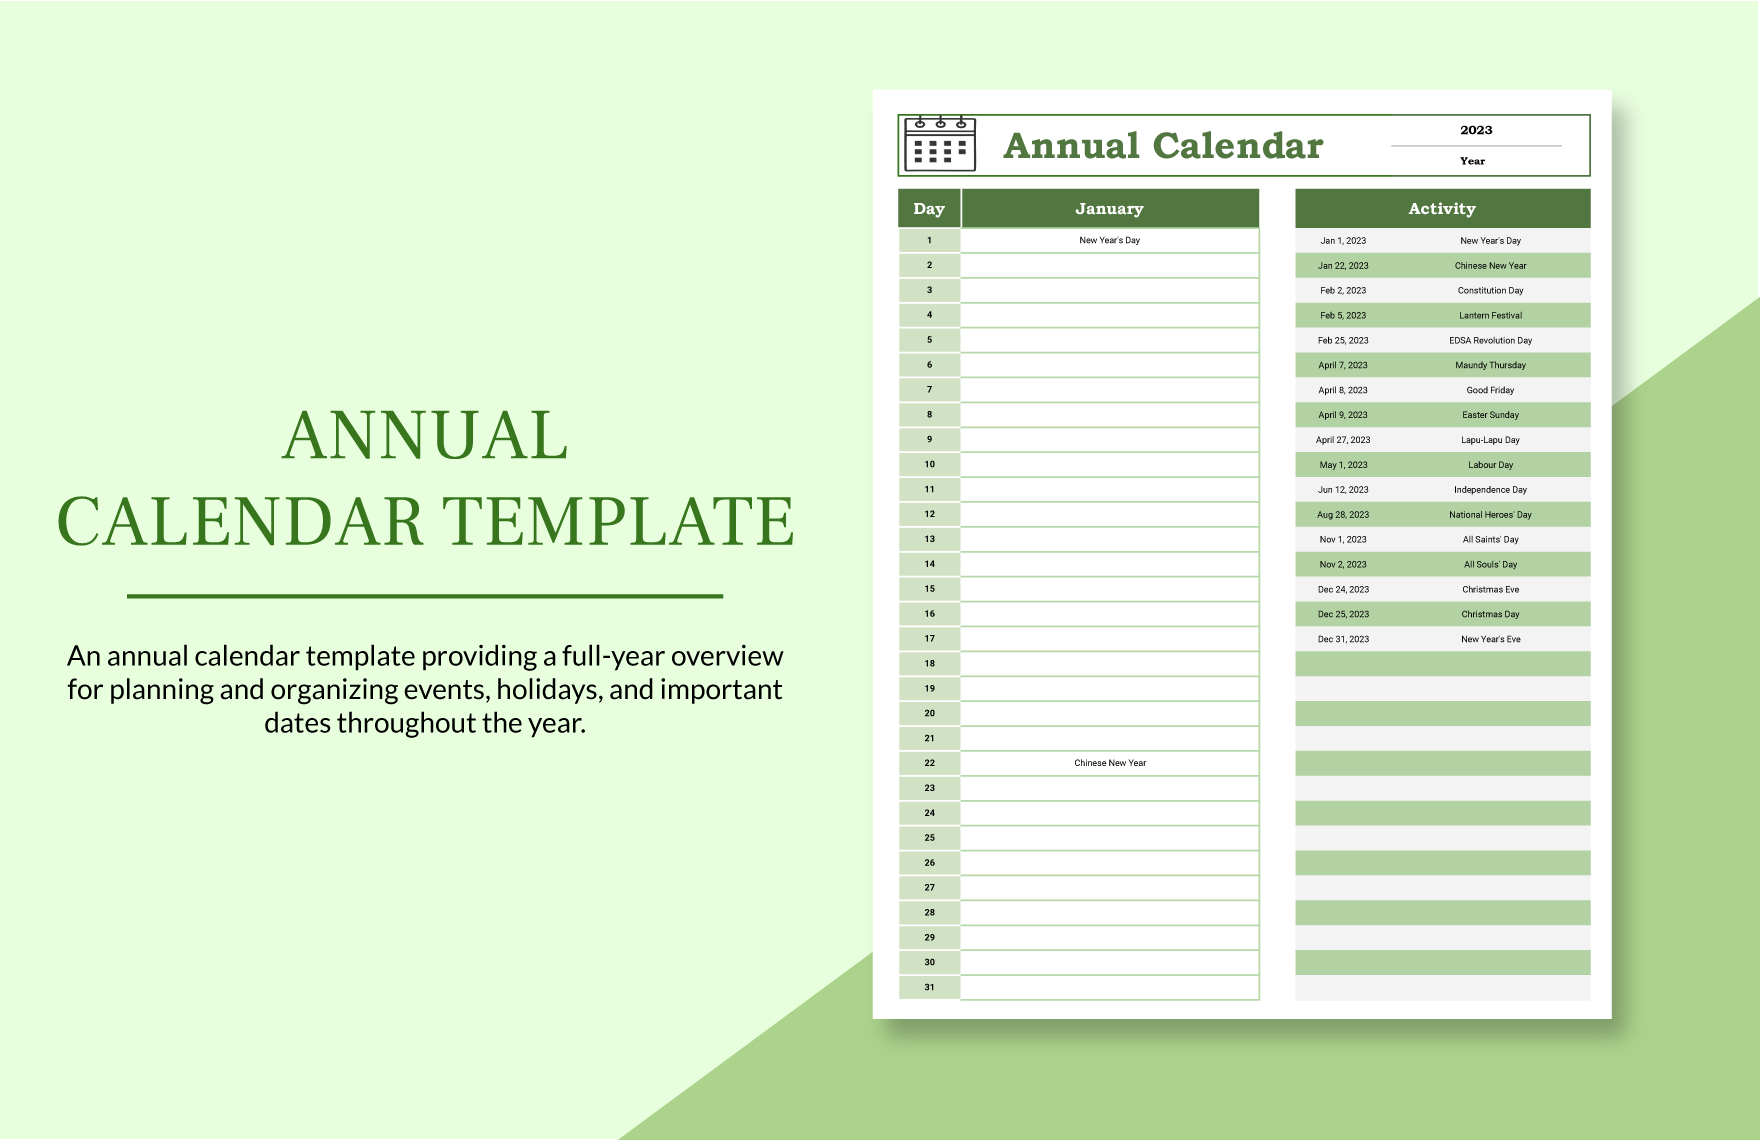 Annual Calendar Template